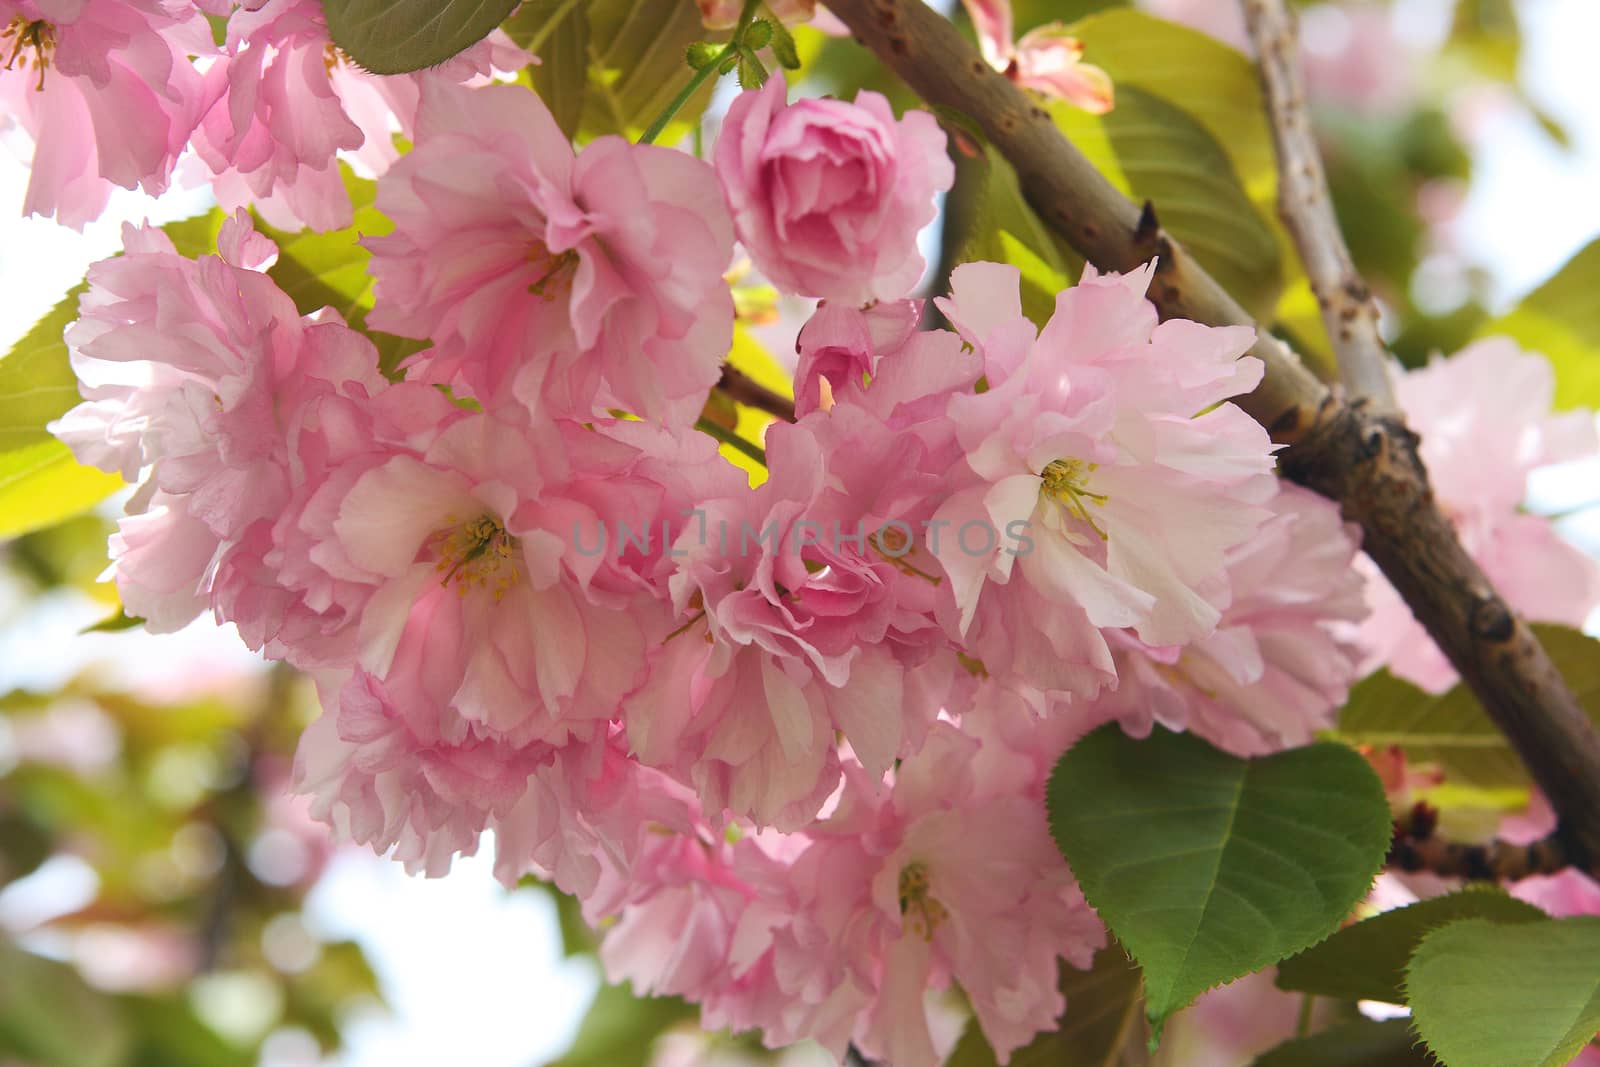  Pink Flowers decorative tree in the garden Sakura  by cococinema